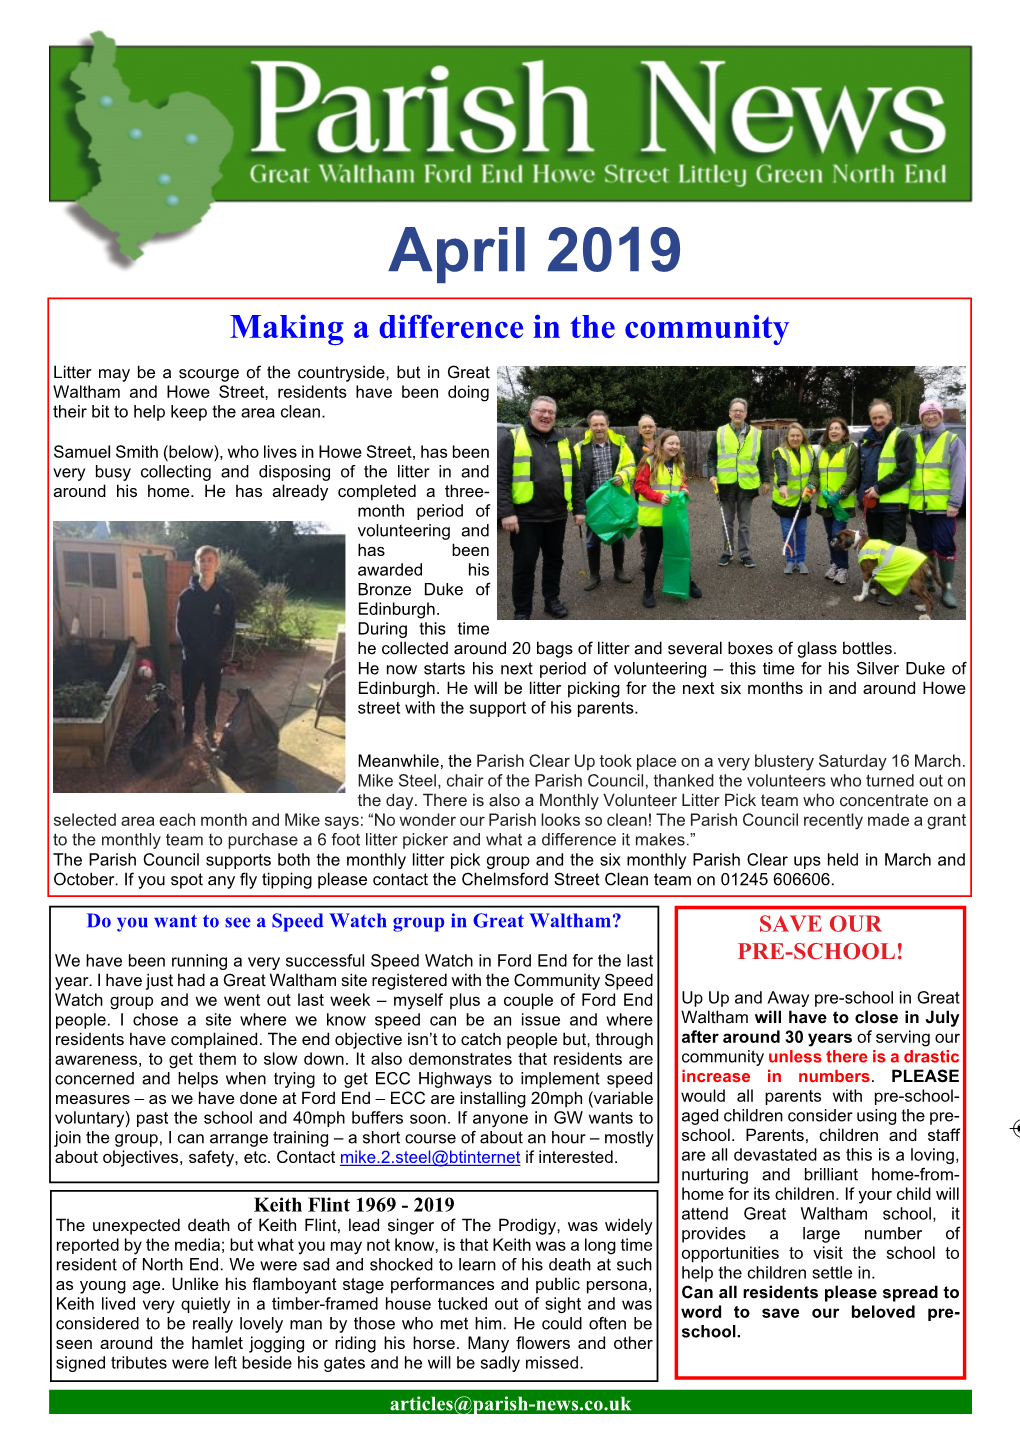 April 2019 Parish News